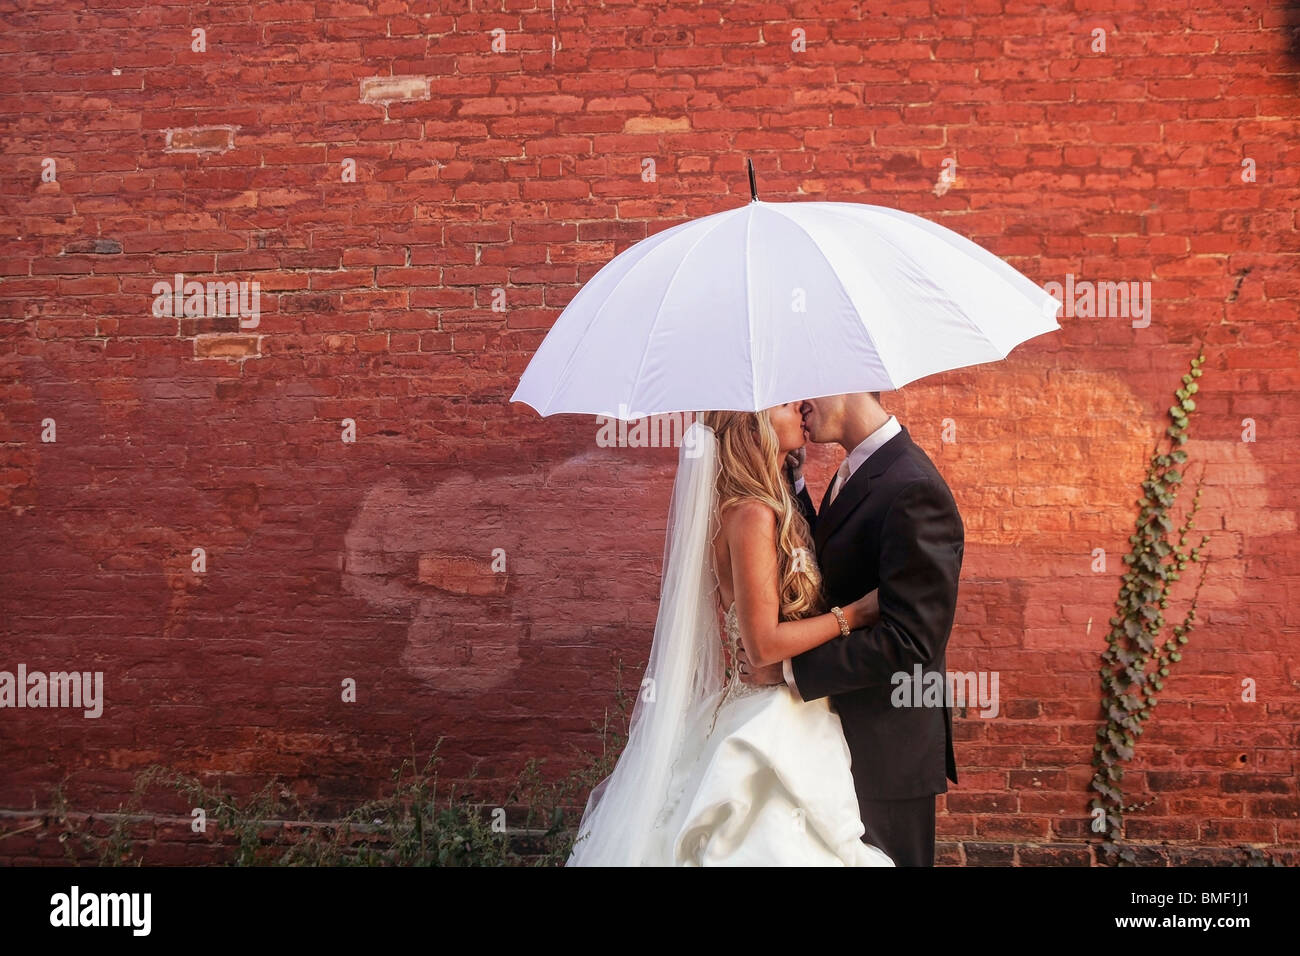 A Bride And Groom Under A White Umbrella Stock Photo